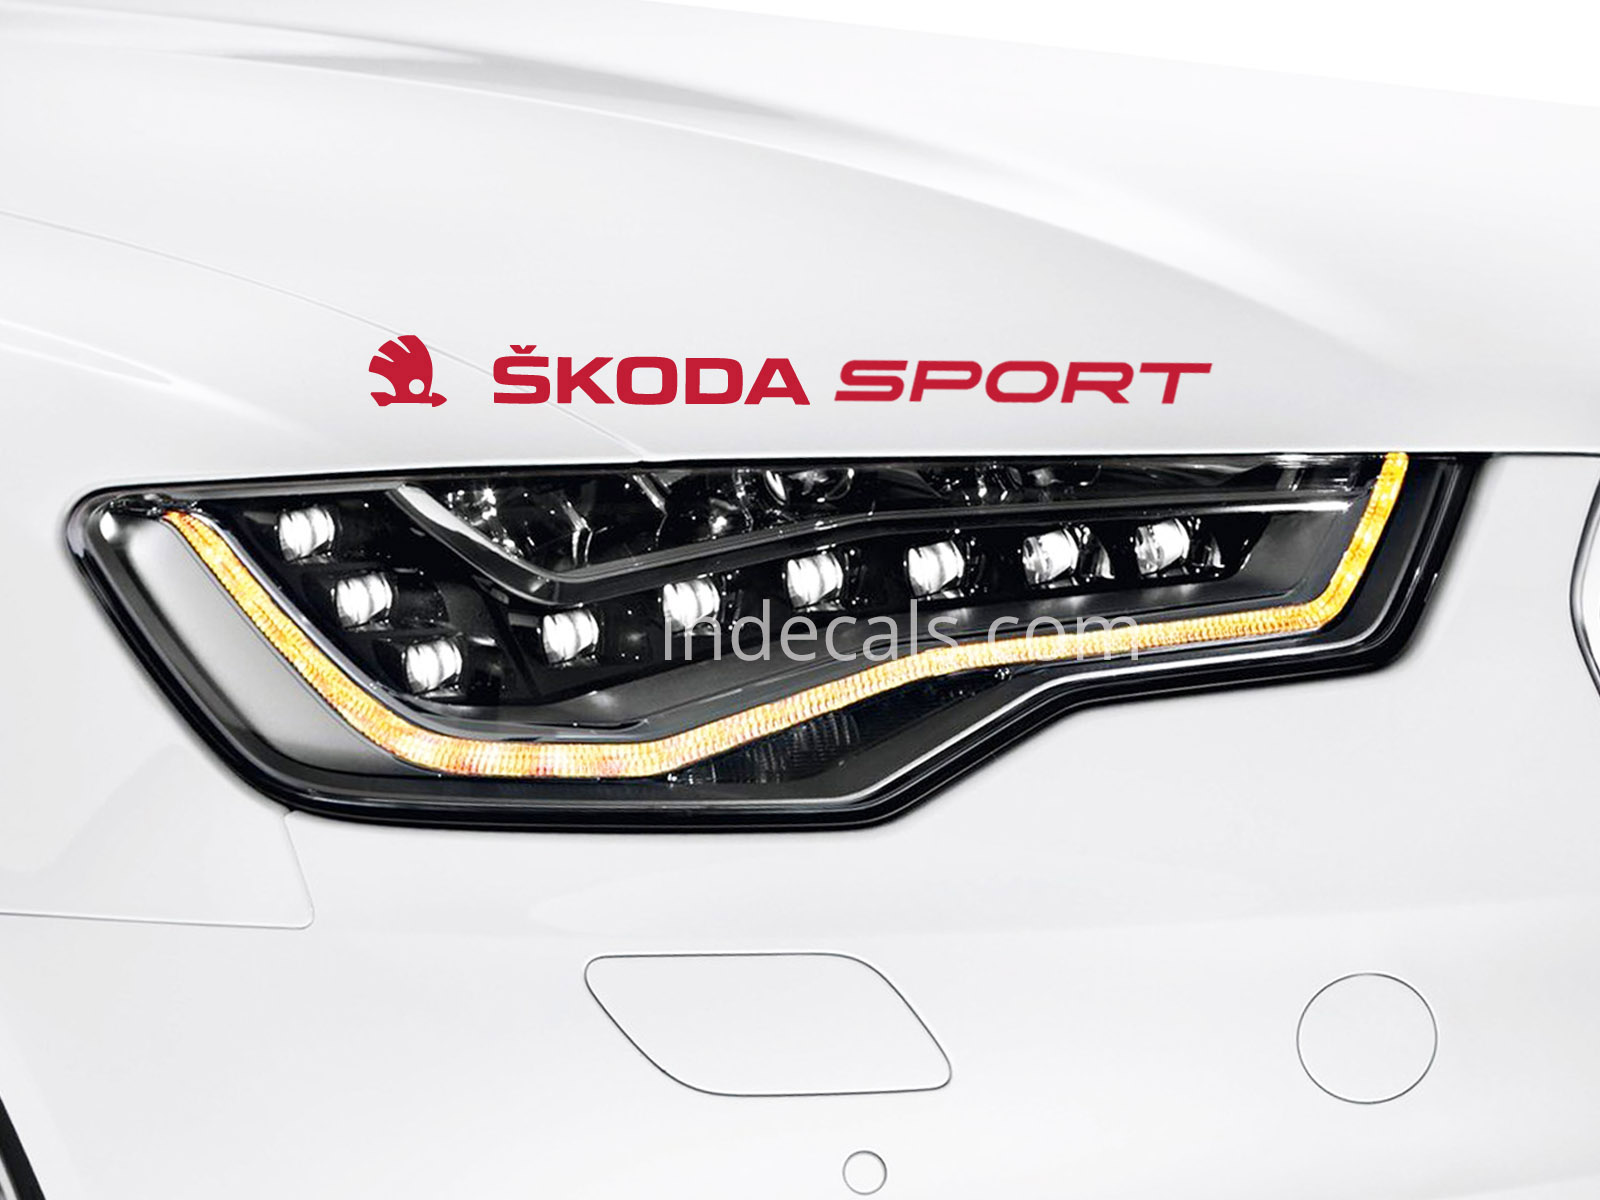 1 x Skoda Sport Sticker - Red